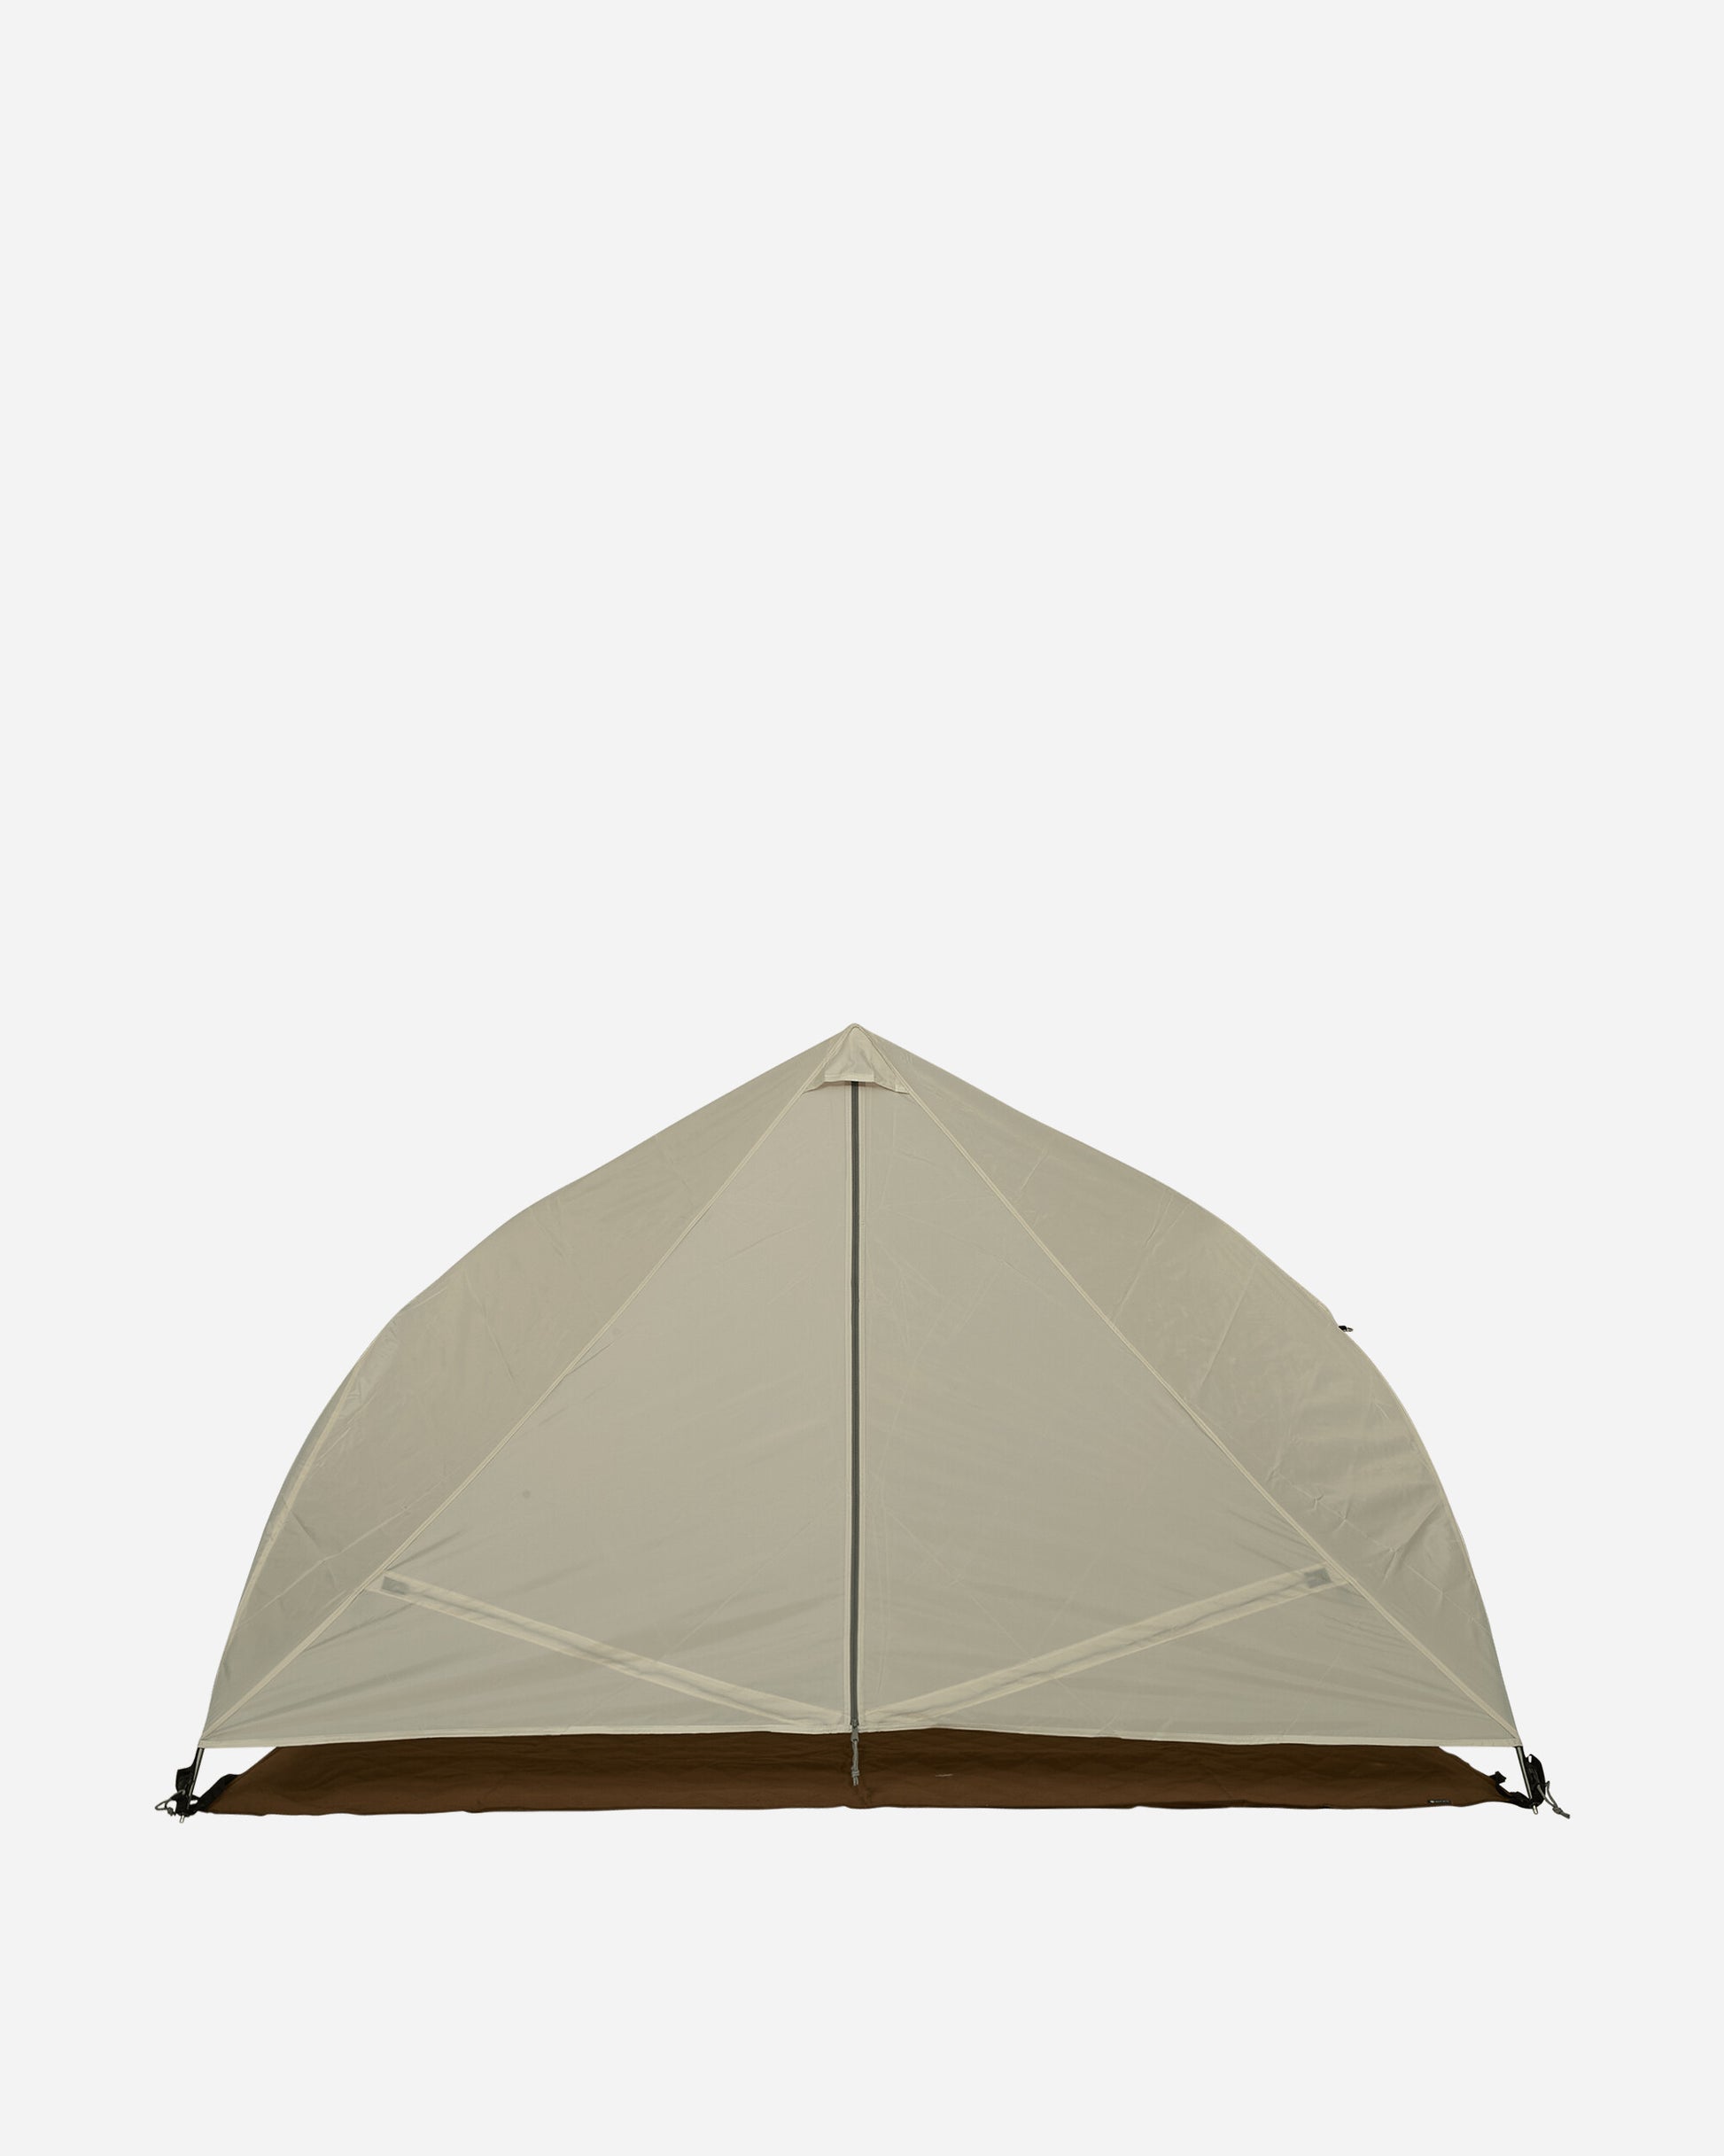 Snow Peak Toya 2 Shelter Ivory Equipment Tents SD-180 1